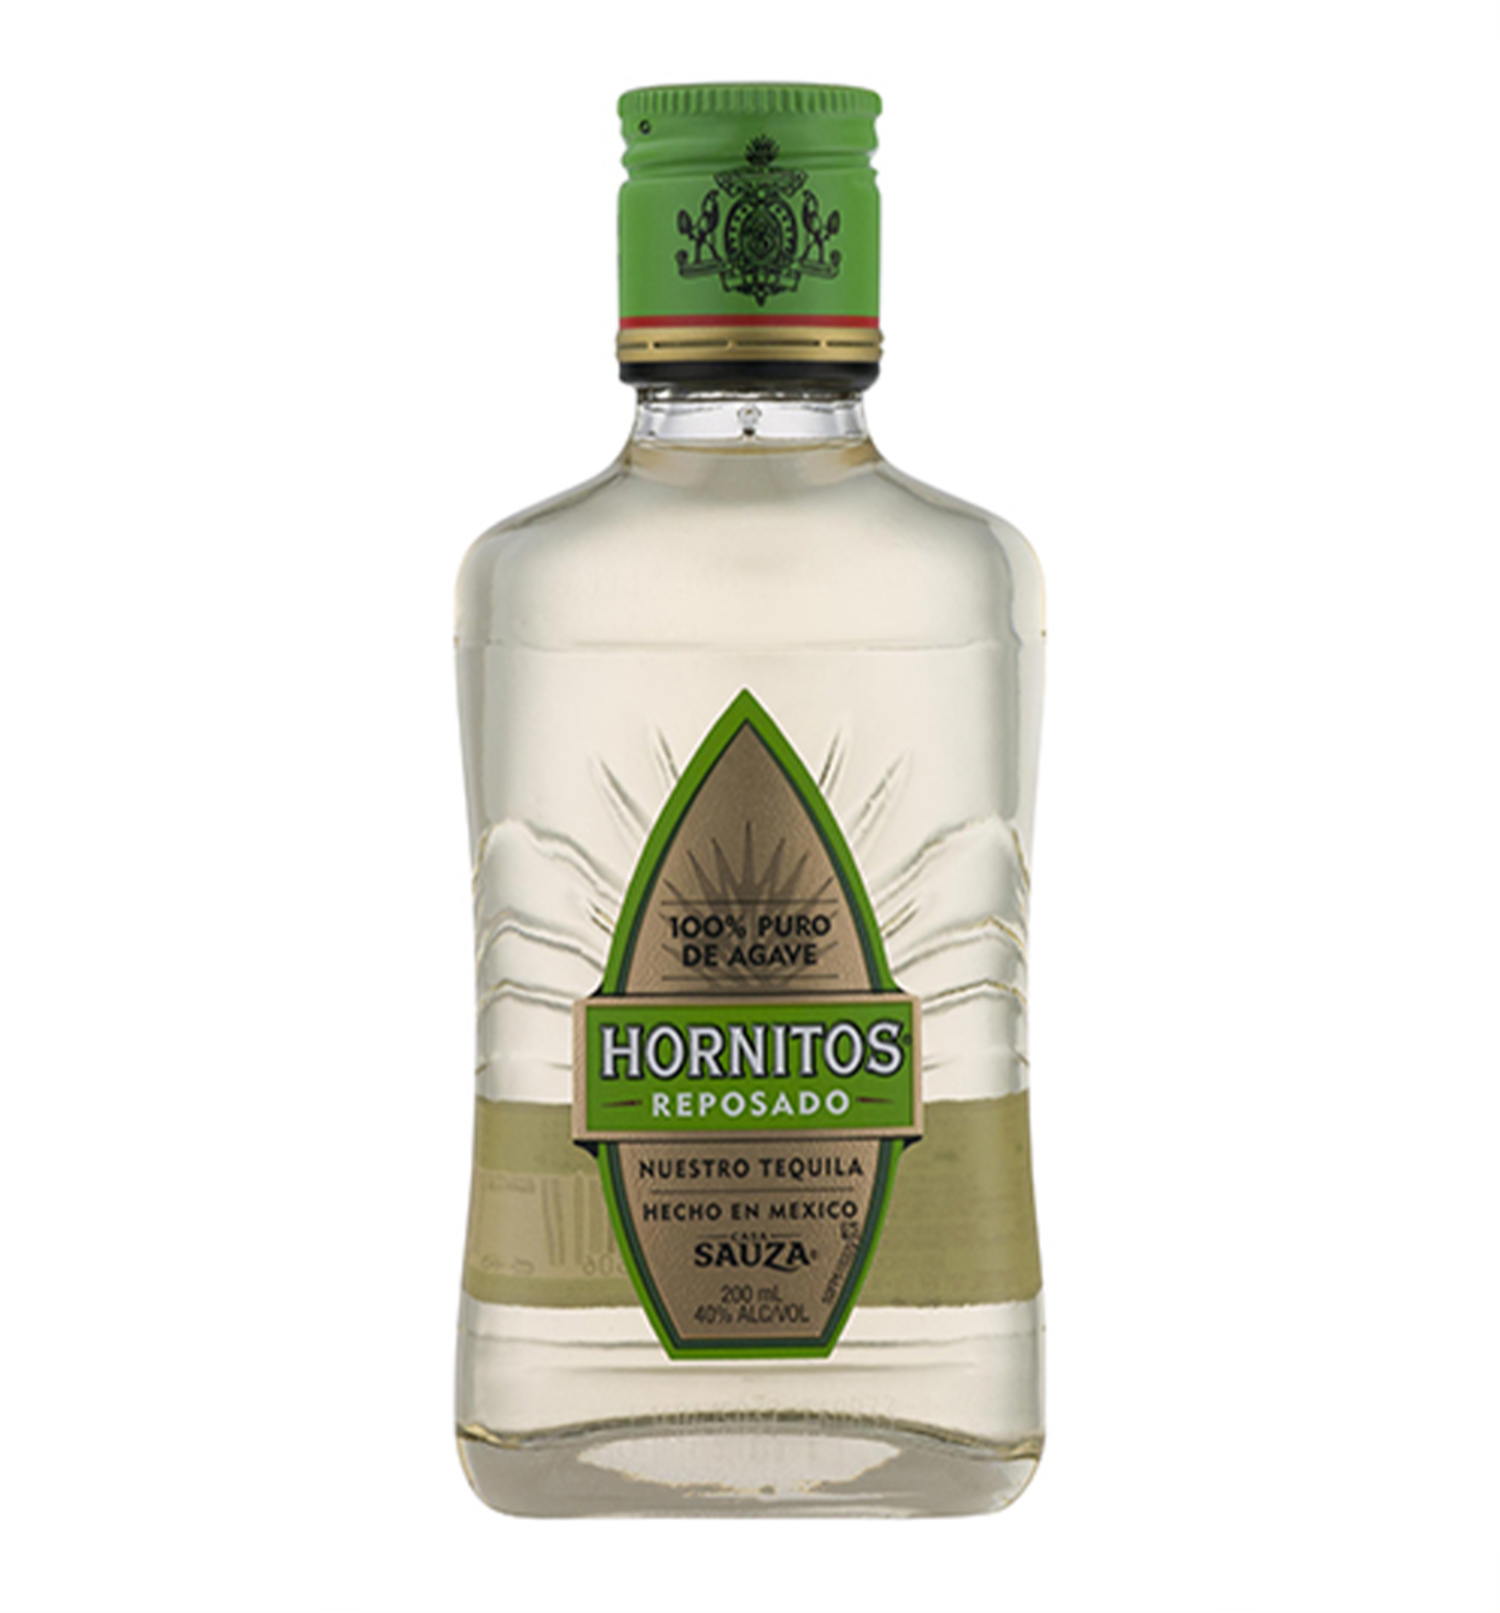 Sauza, Hornitos Reposado Tequila 100% de Agave 200ml $4 FREE DELIVERY ...